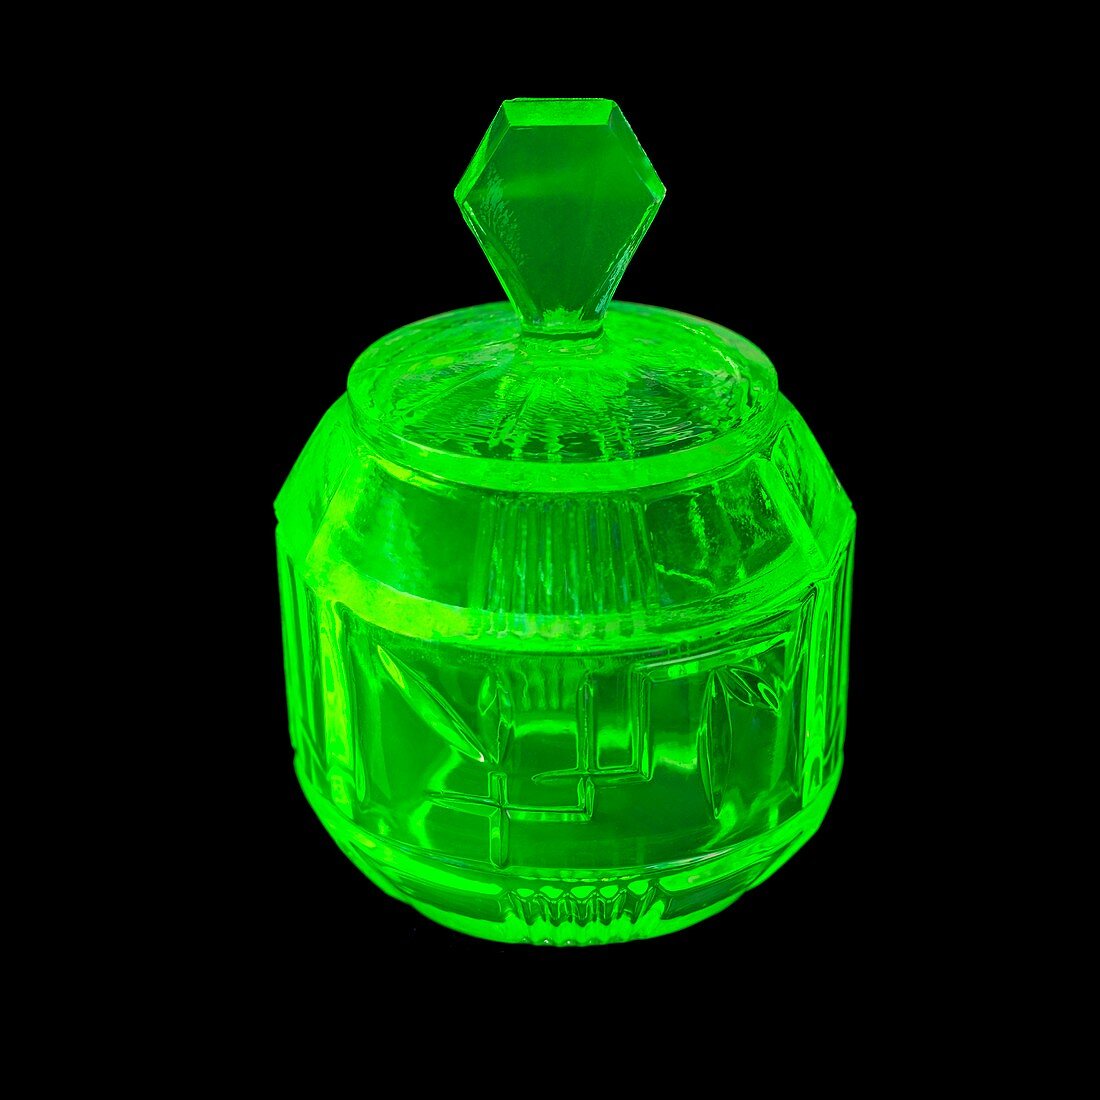 Uranium glass fluorescing